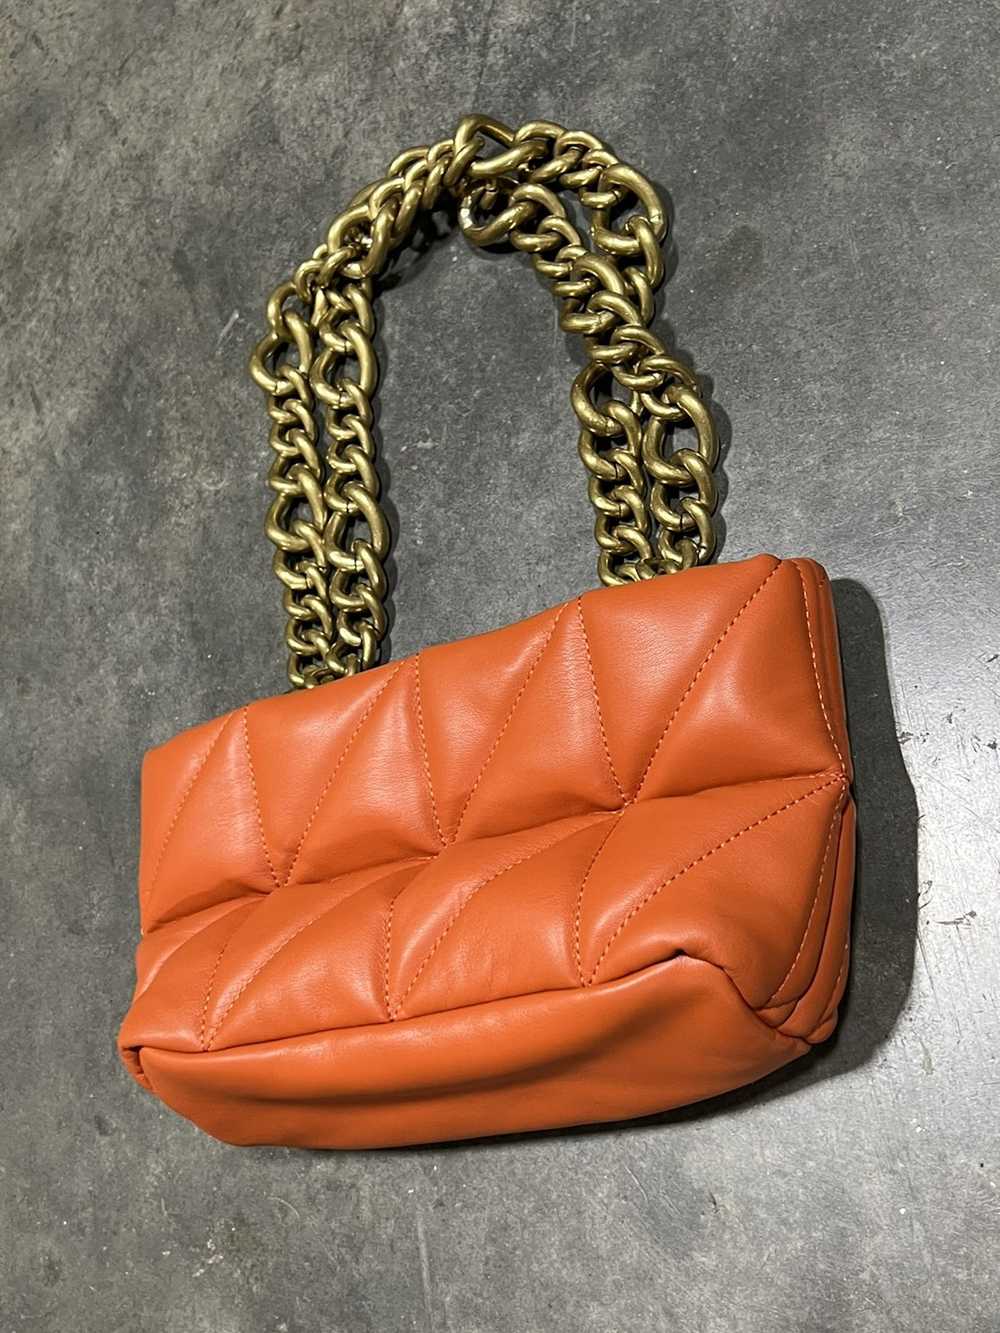 Zara ZARA Orange Fluff Hand Bag - image 5